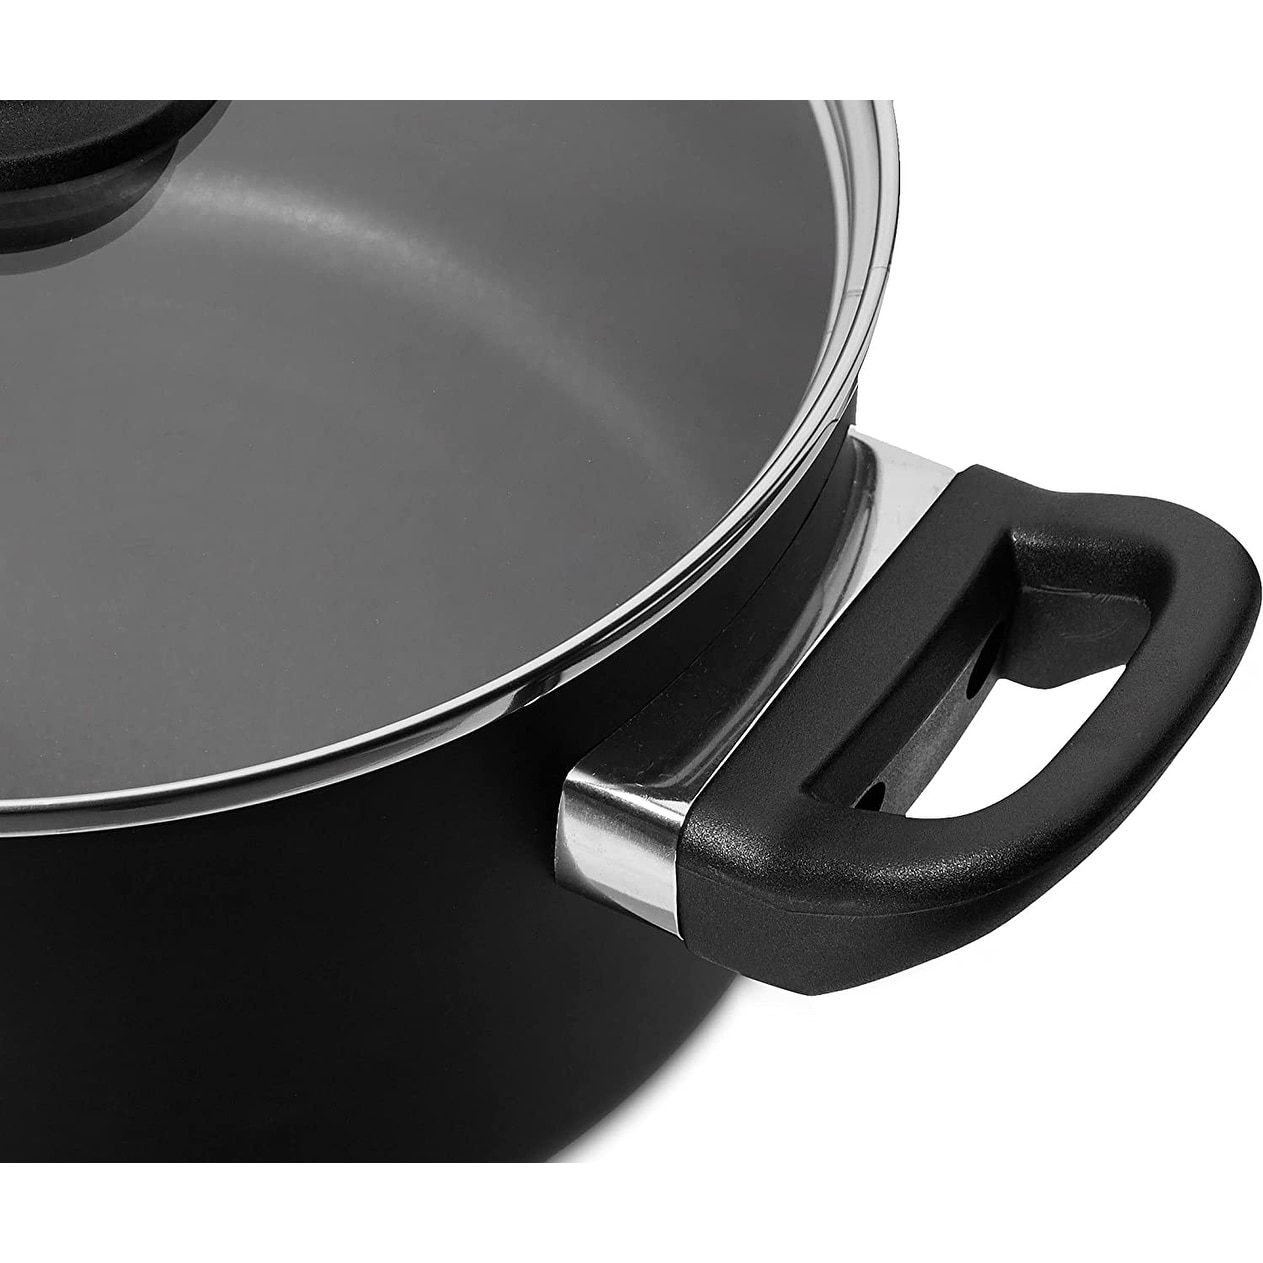 Basics 8-Piece Non-Stick Kitchen Cookware Set, Pots and Pans - Shop -  TexasRealFood